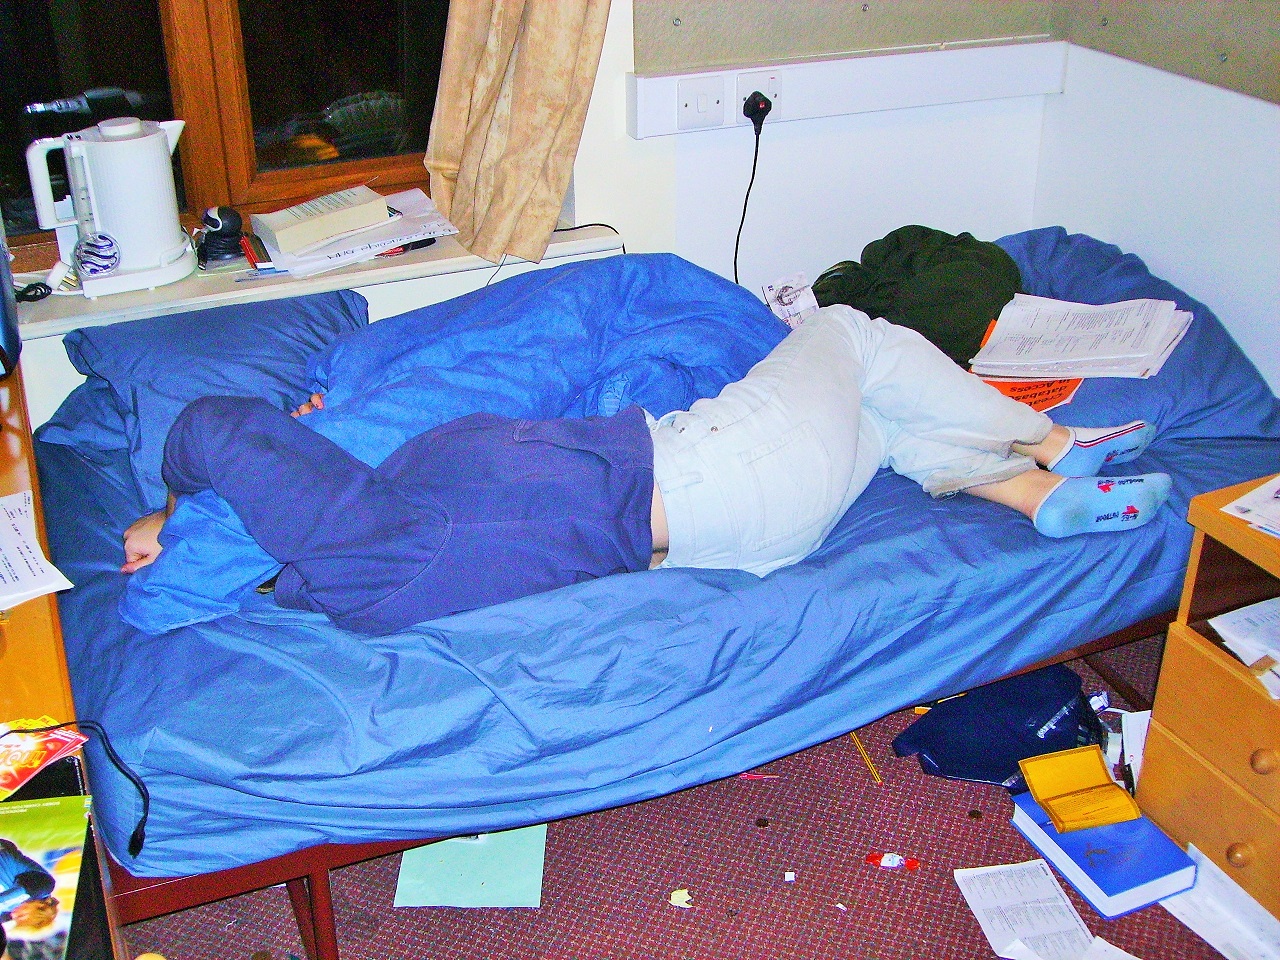 Thirteen Valentines Days - Messy bedroom, student accommodation